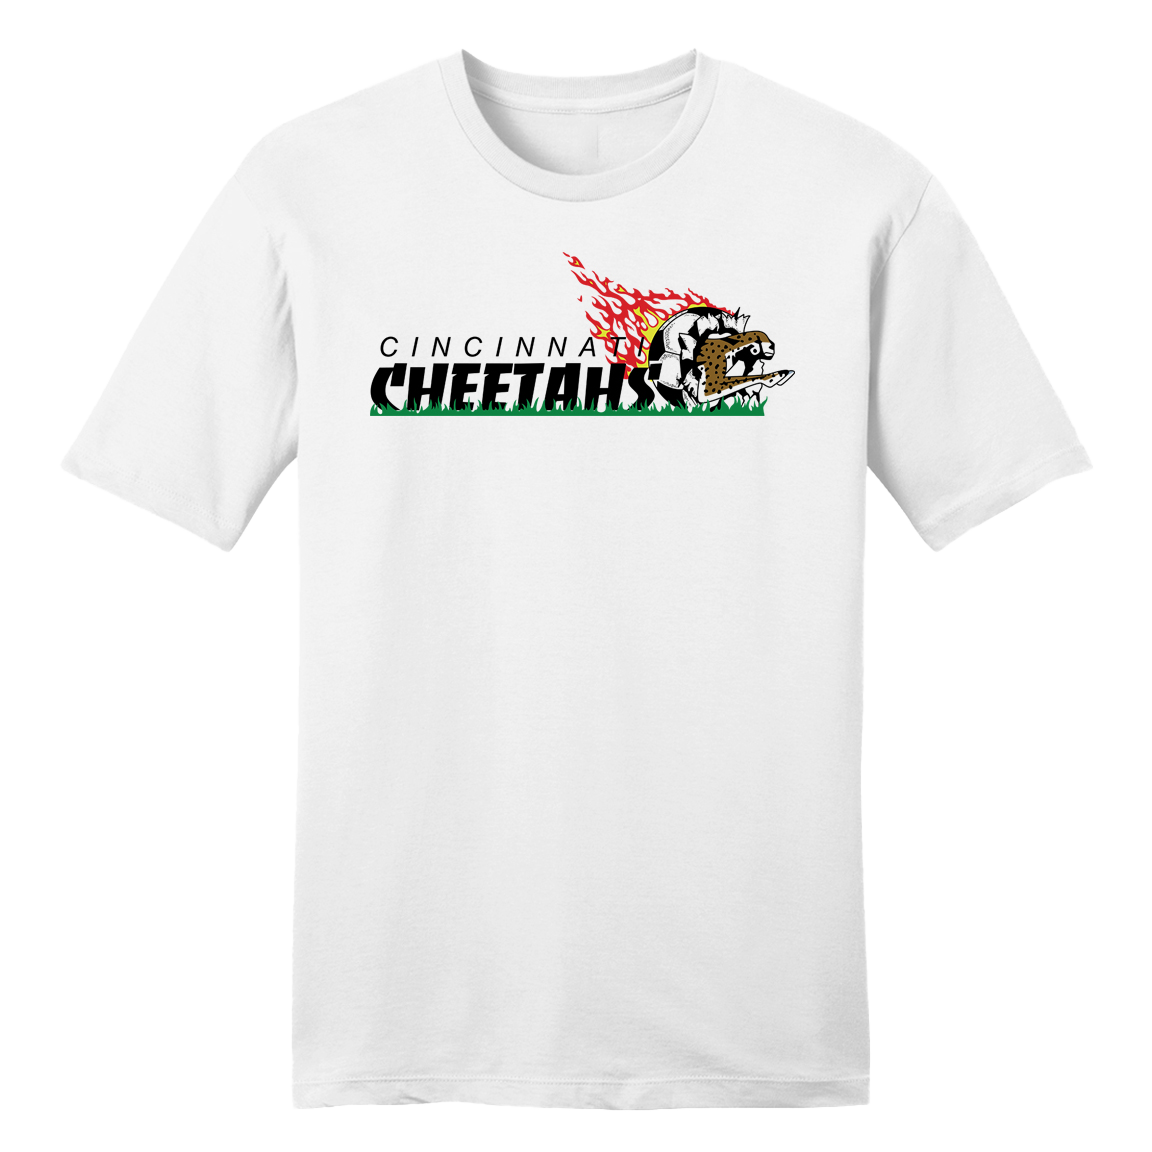 Cincinnati Cheetahs Soccer